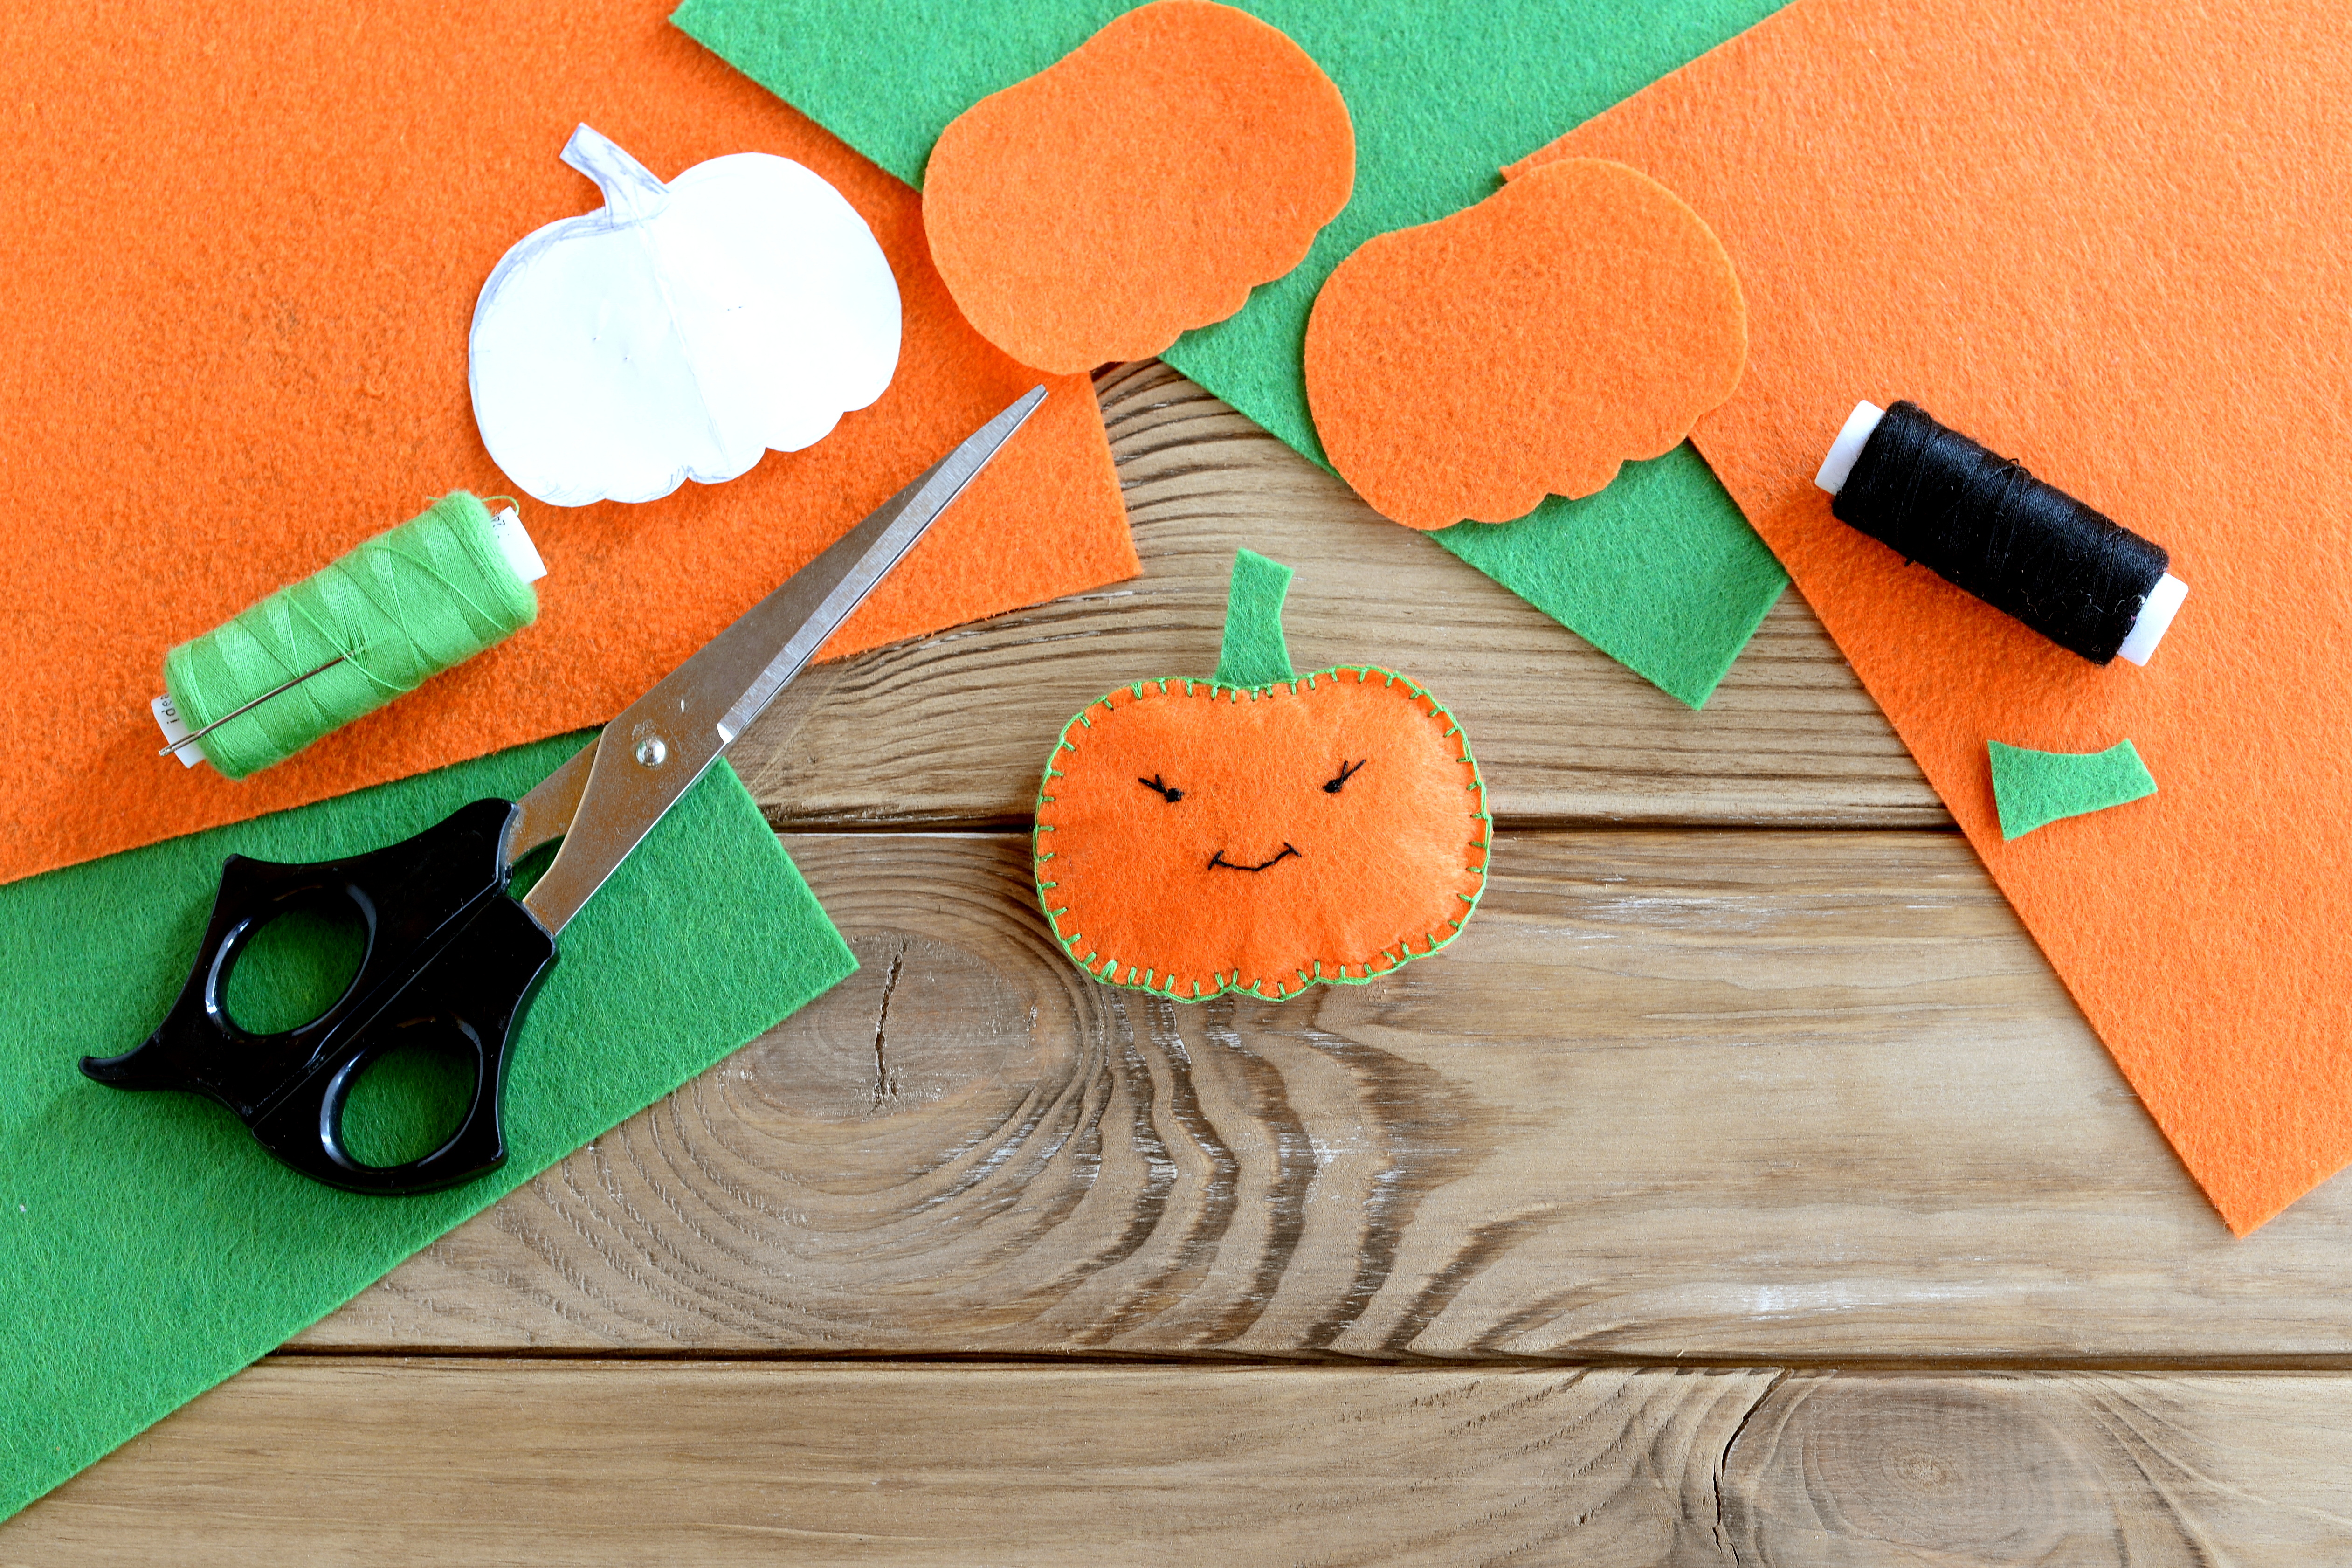 Artfully aranged orange and green felt with scissors, thread, and a finished sewn felt pumpkin.